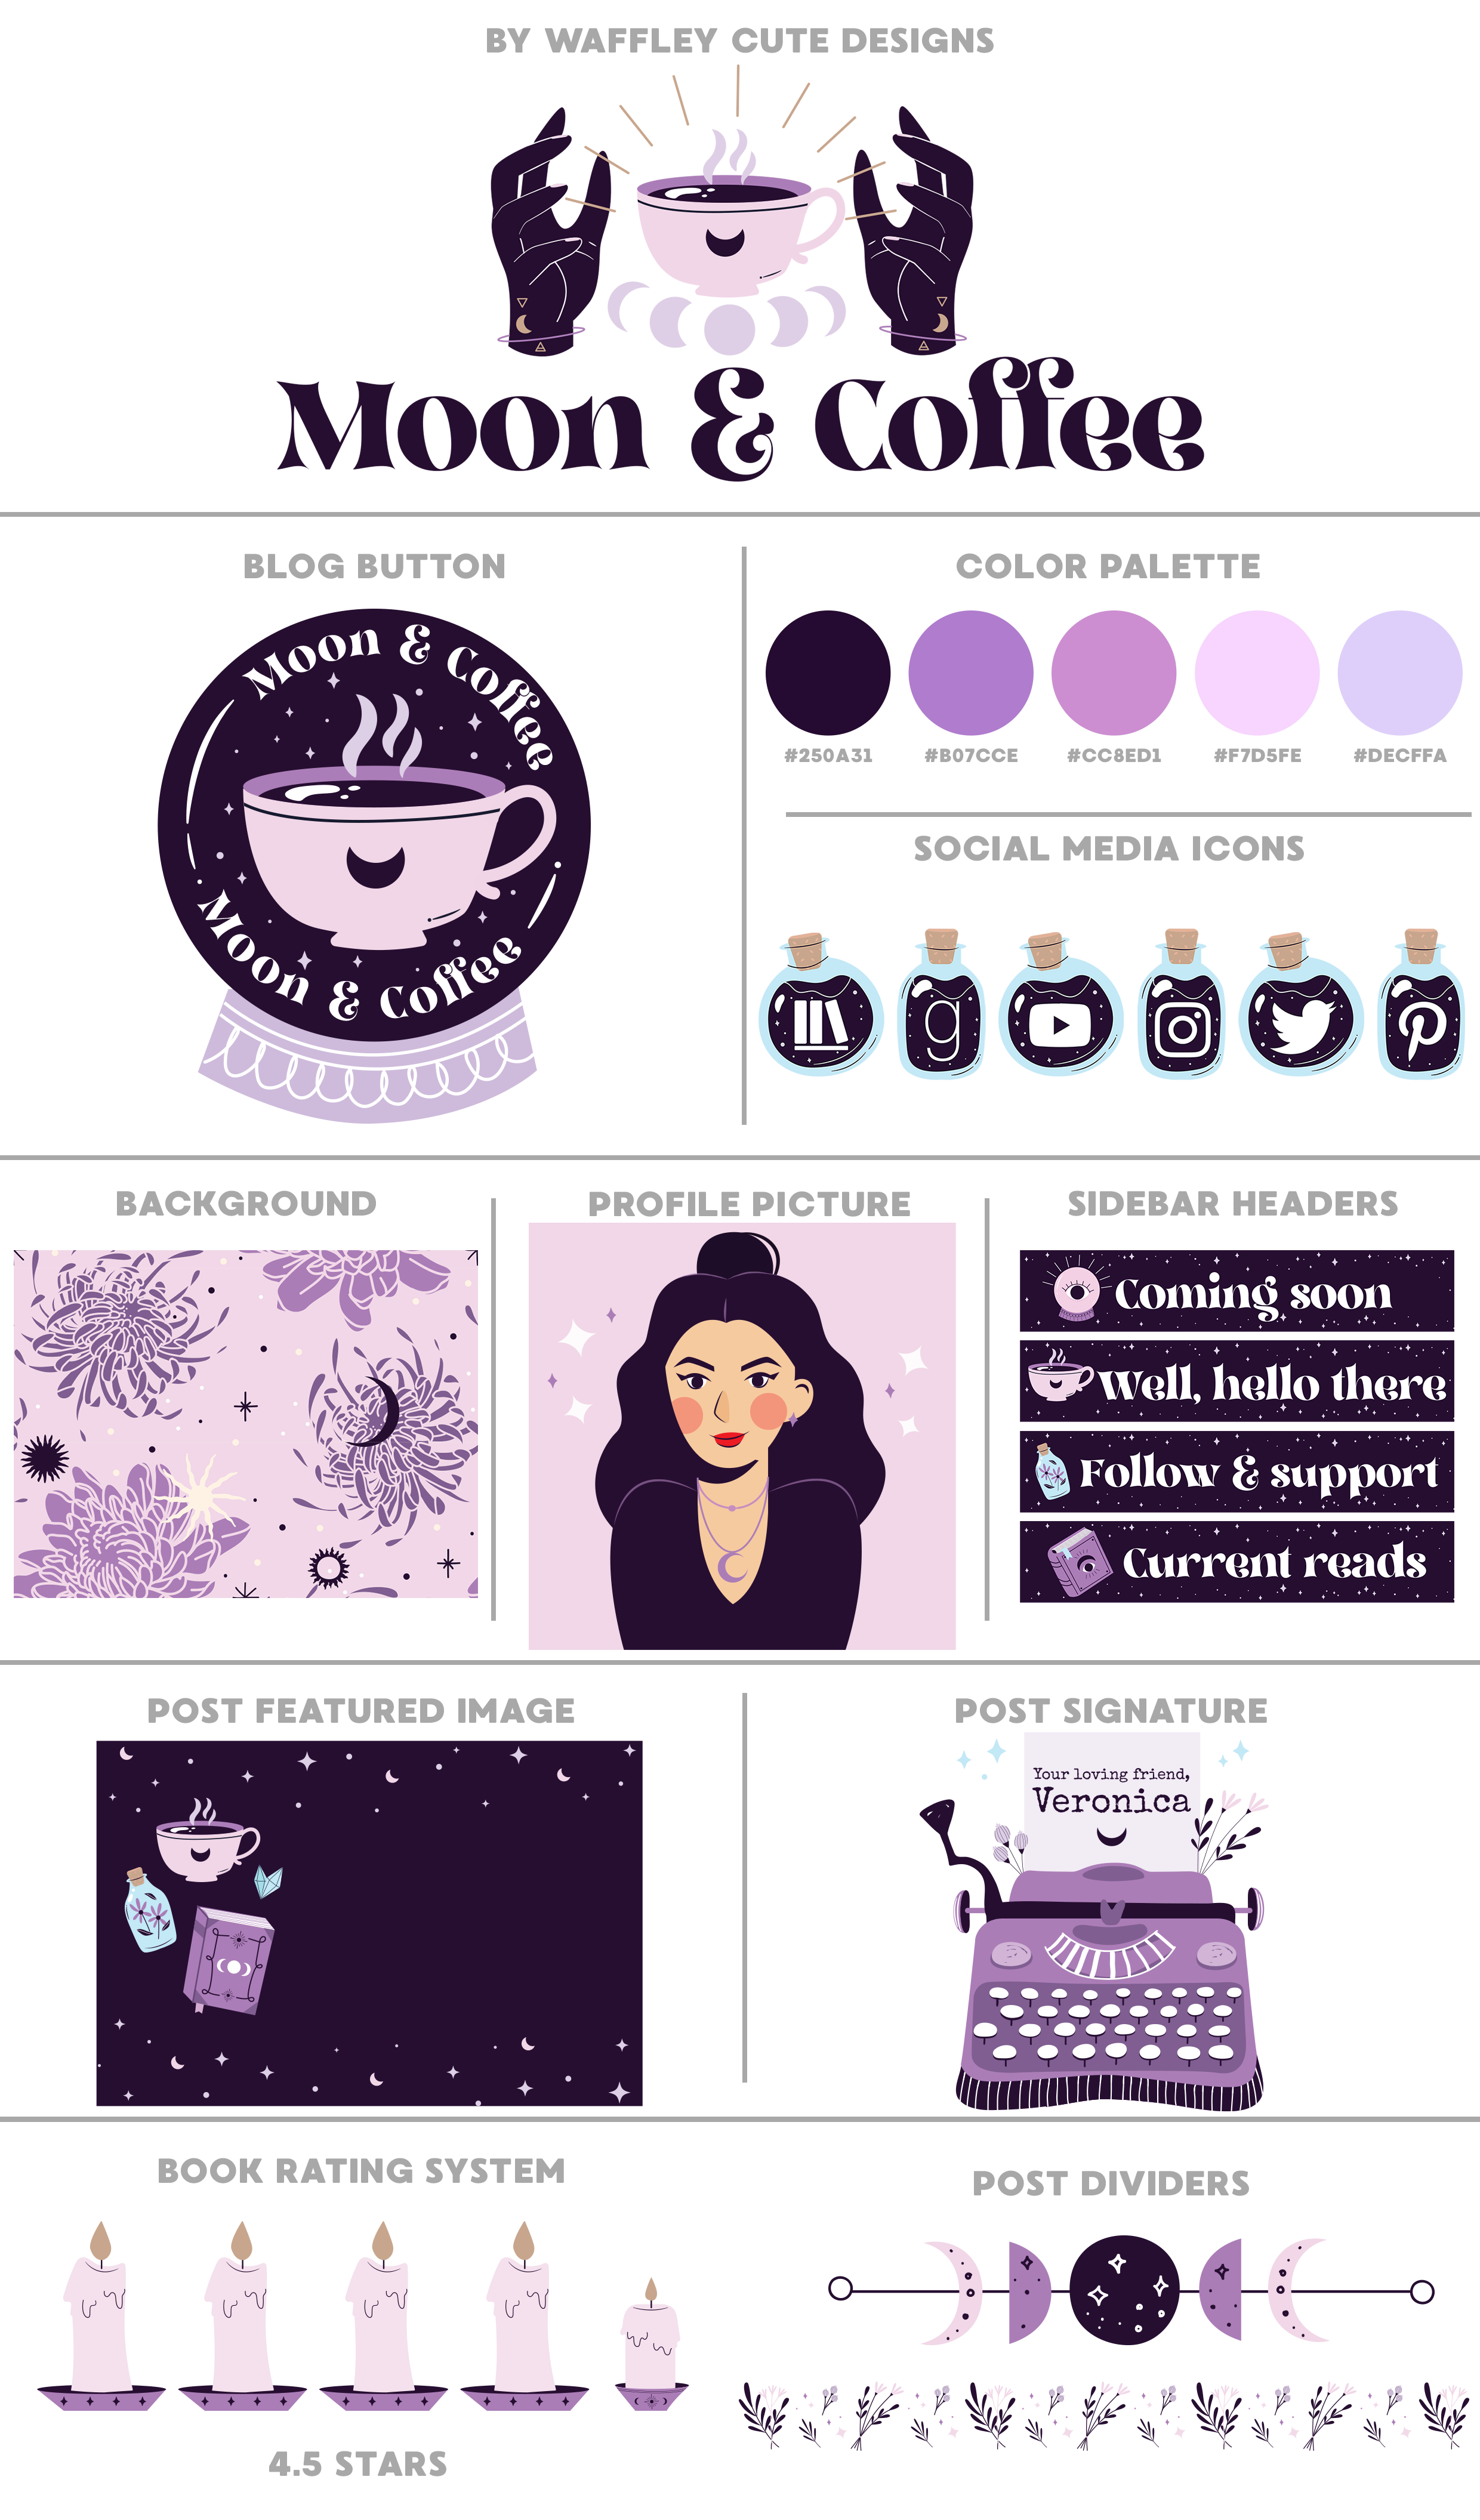 Moon & Coffee Brand Style Sheet